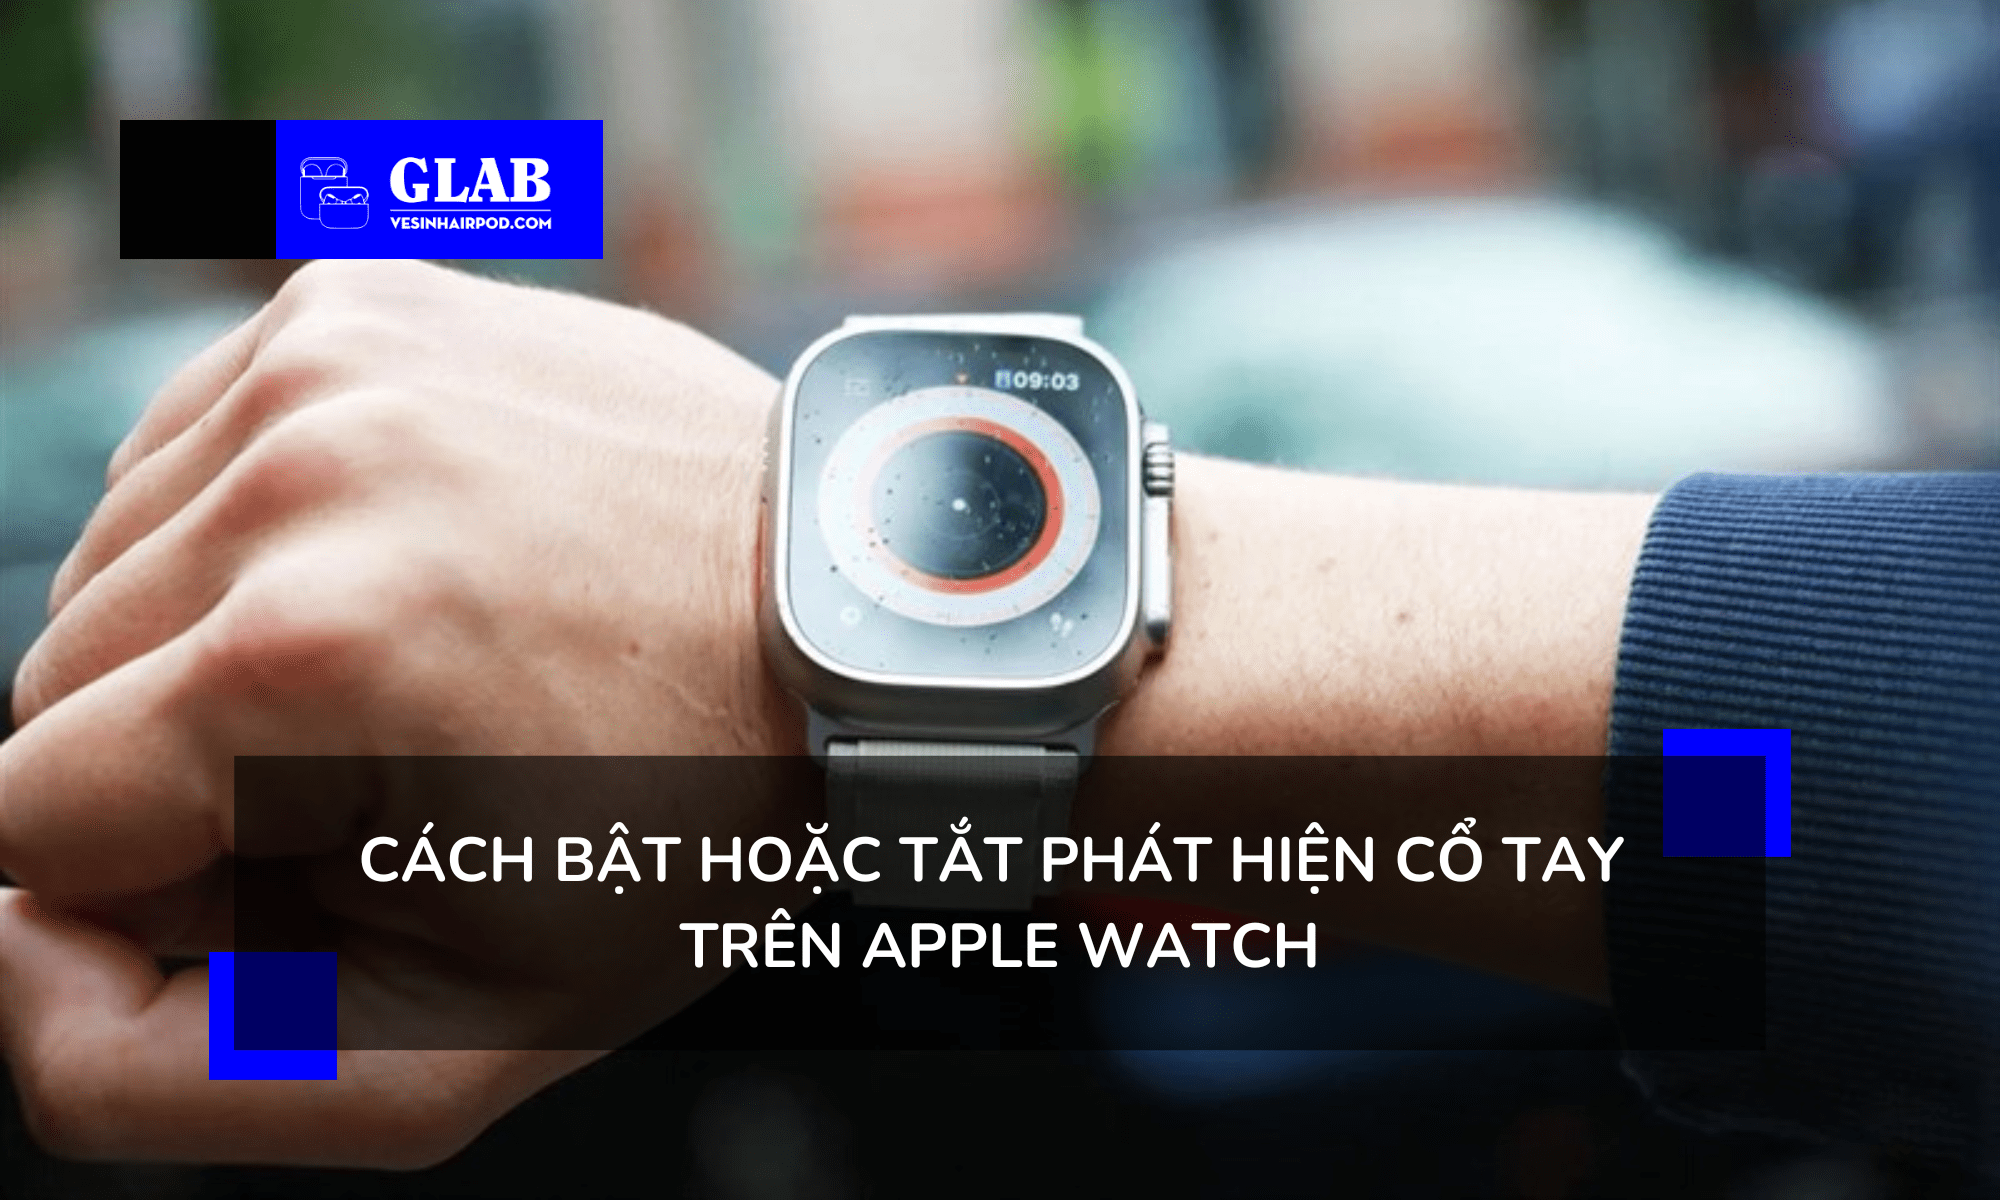 phat-hien-co-tay-tren-apple-watch